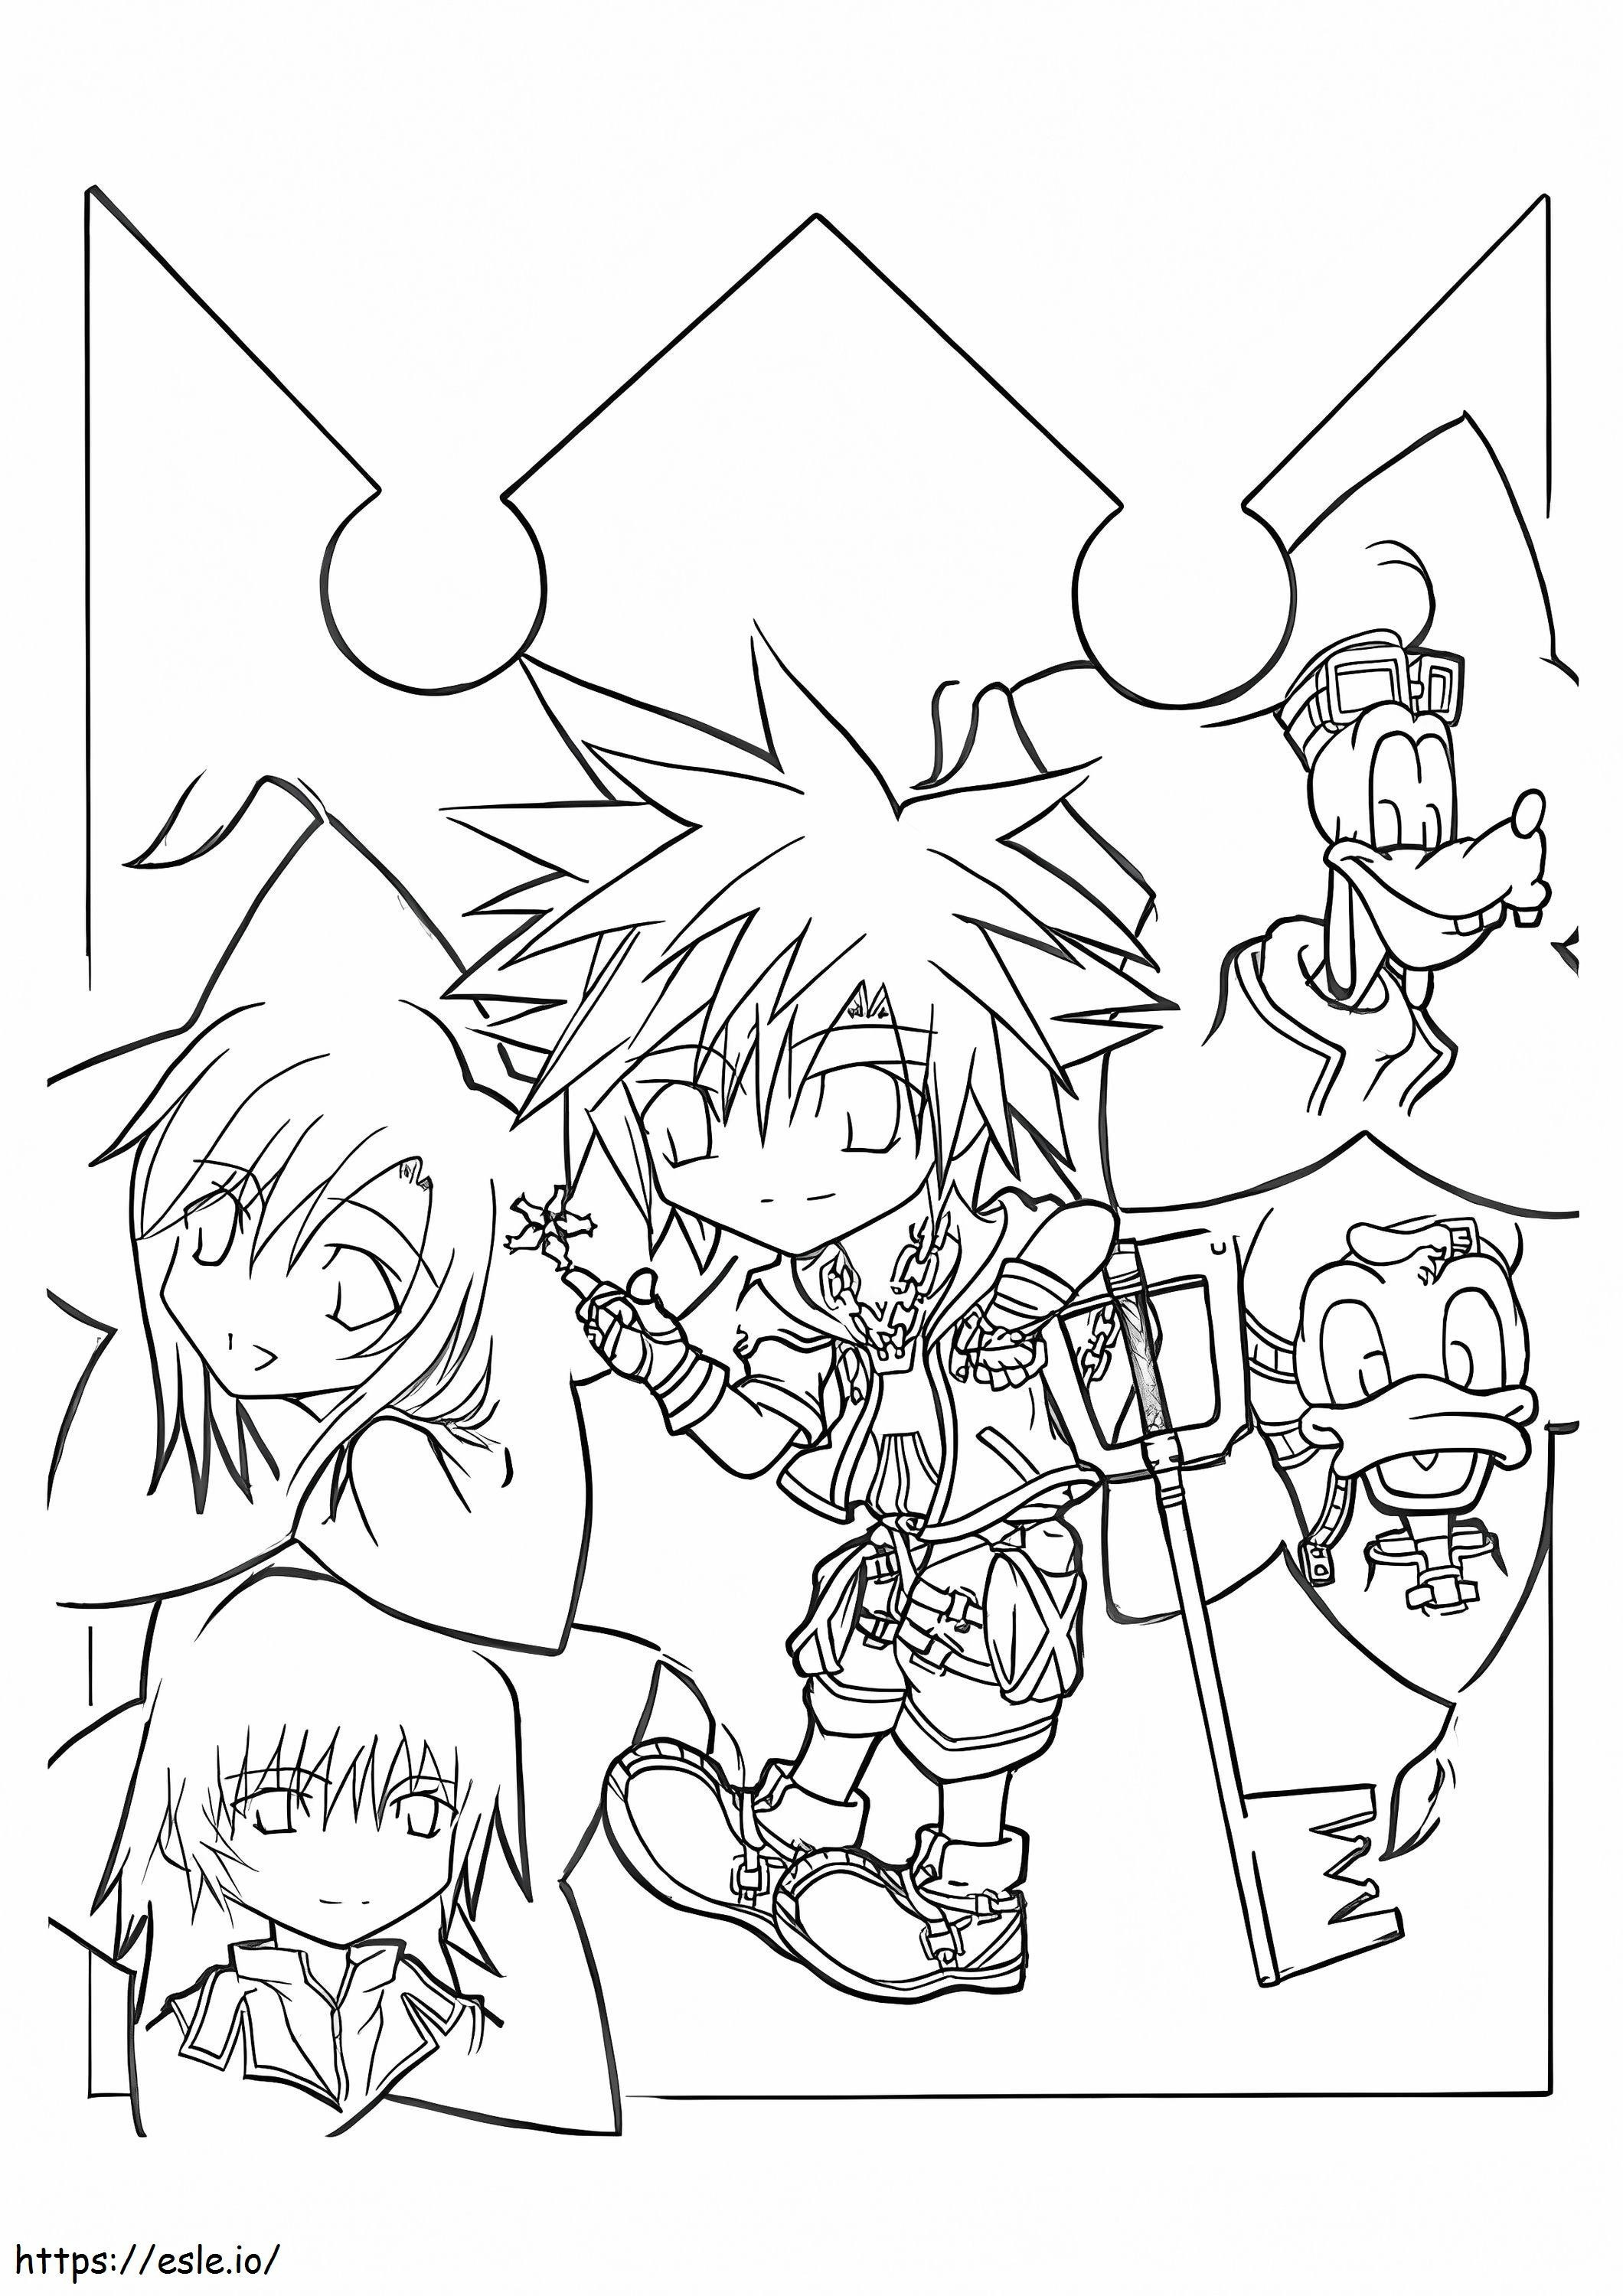 Chibi Kingdom Hearts coloring page